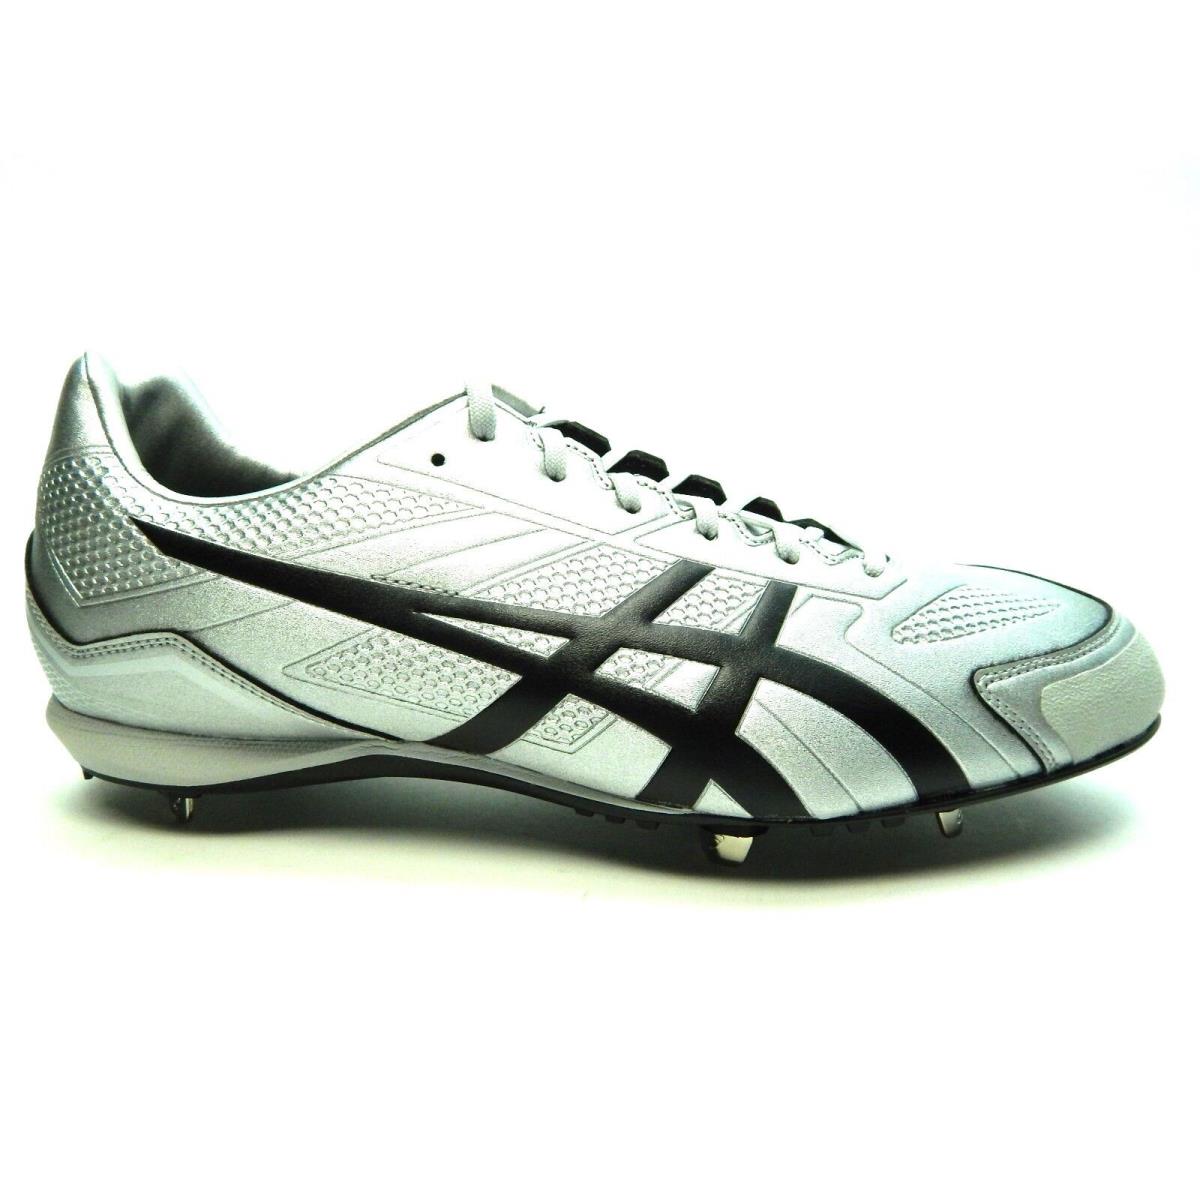 Asics Base Burner Silver Black Baseball Men Shoes Size 6.5